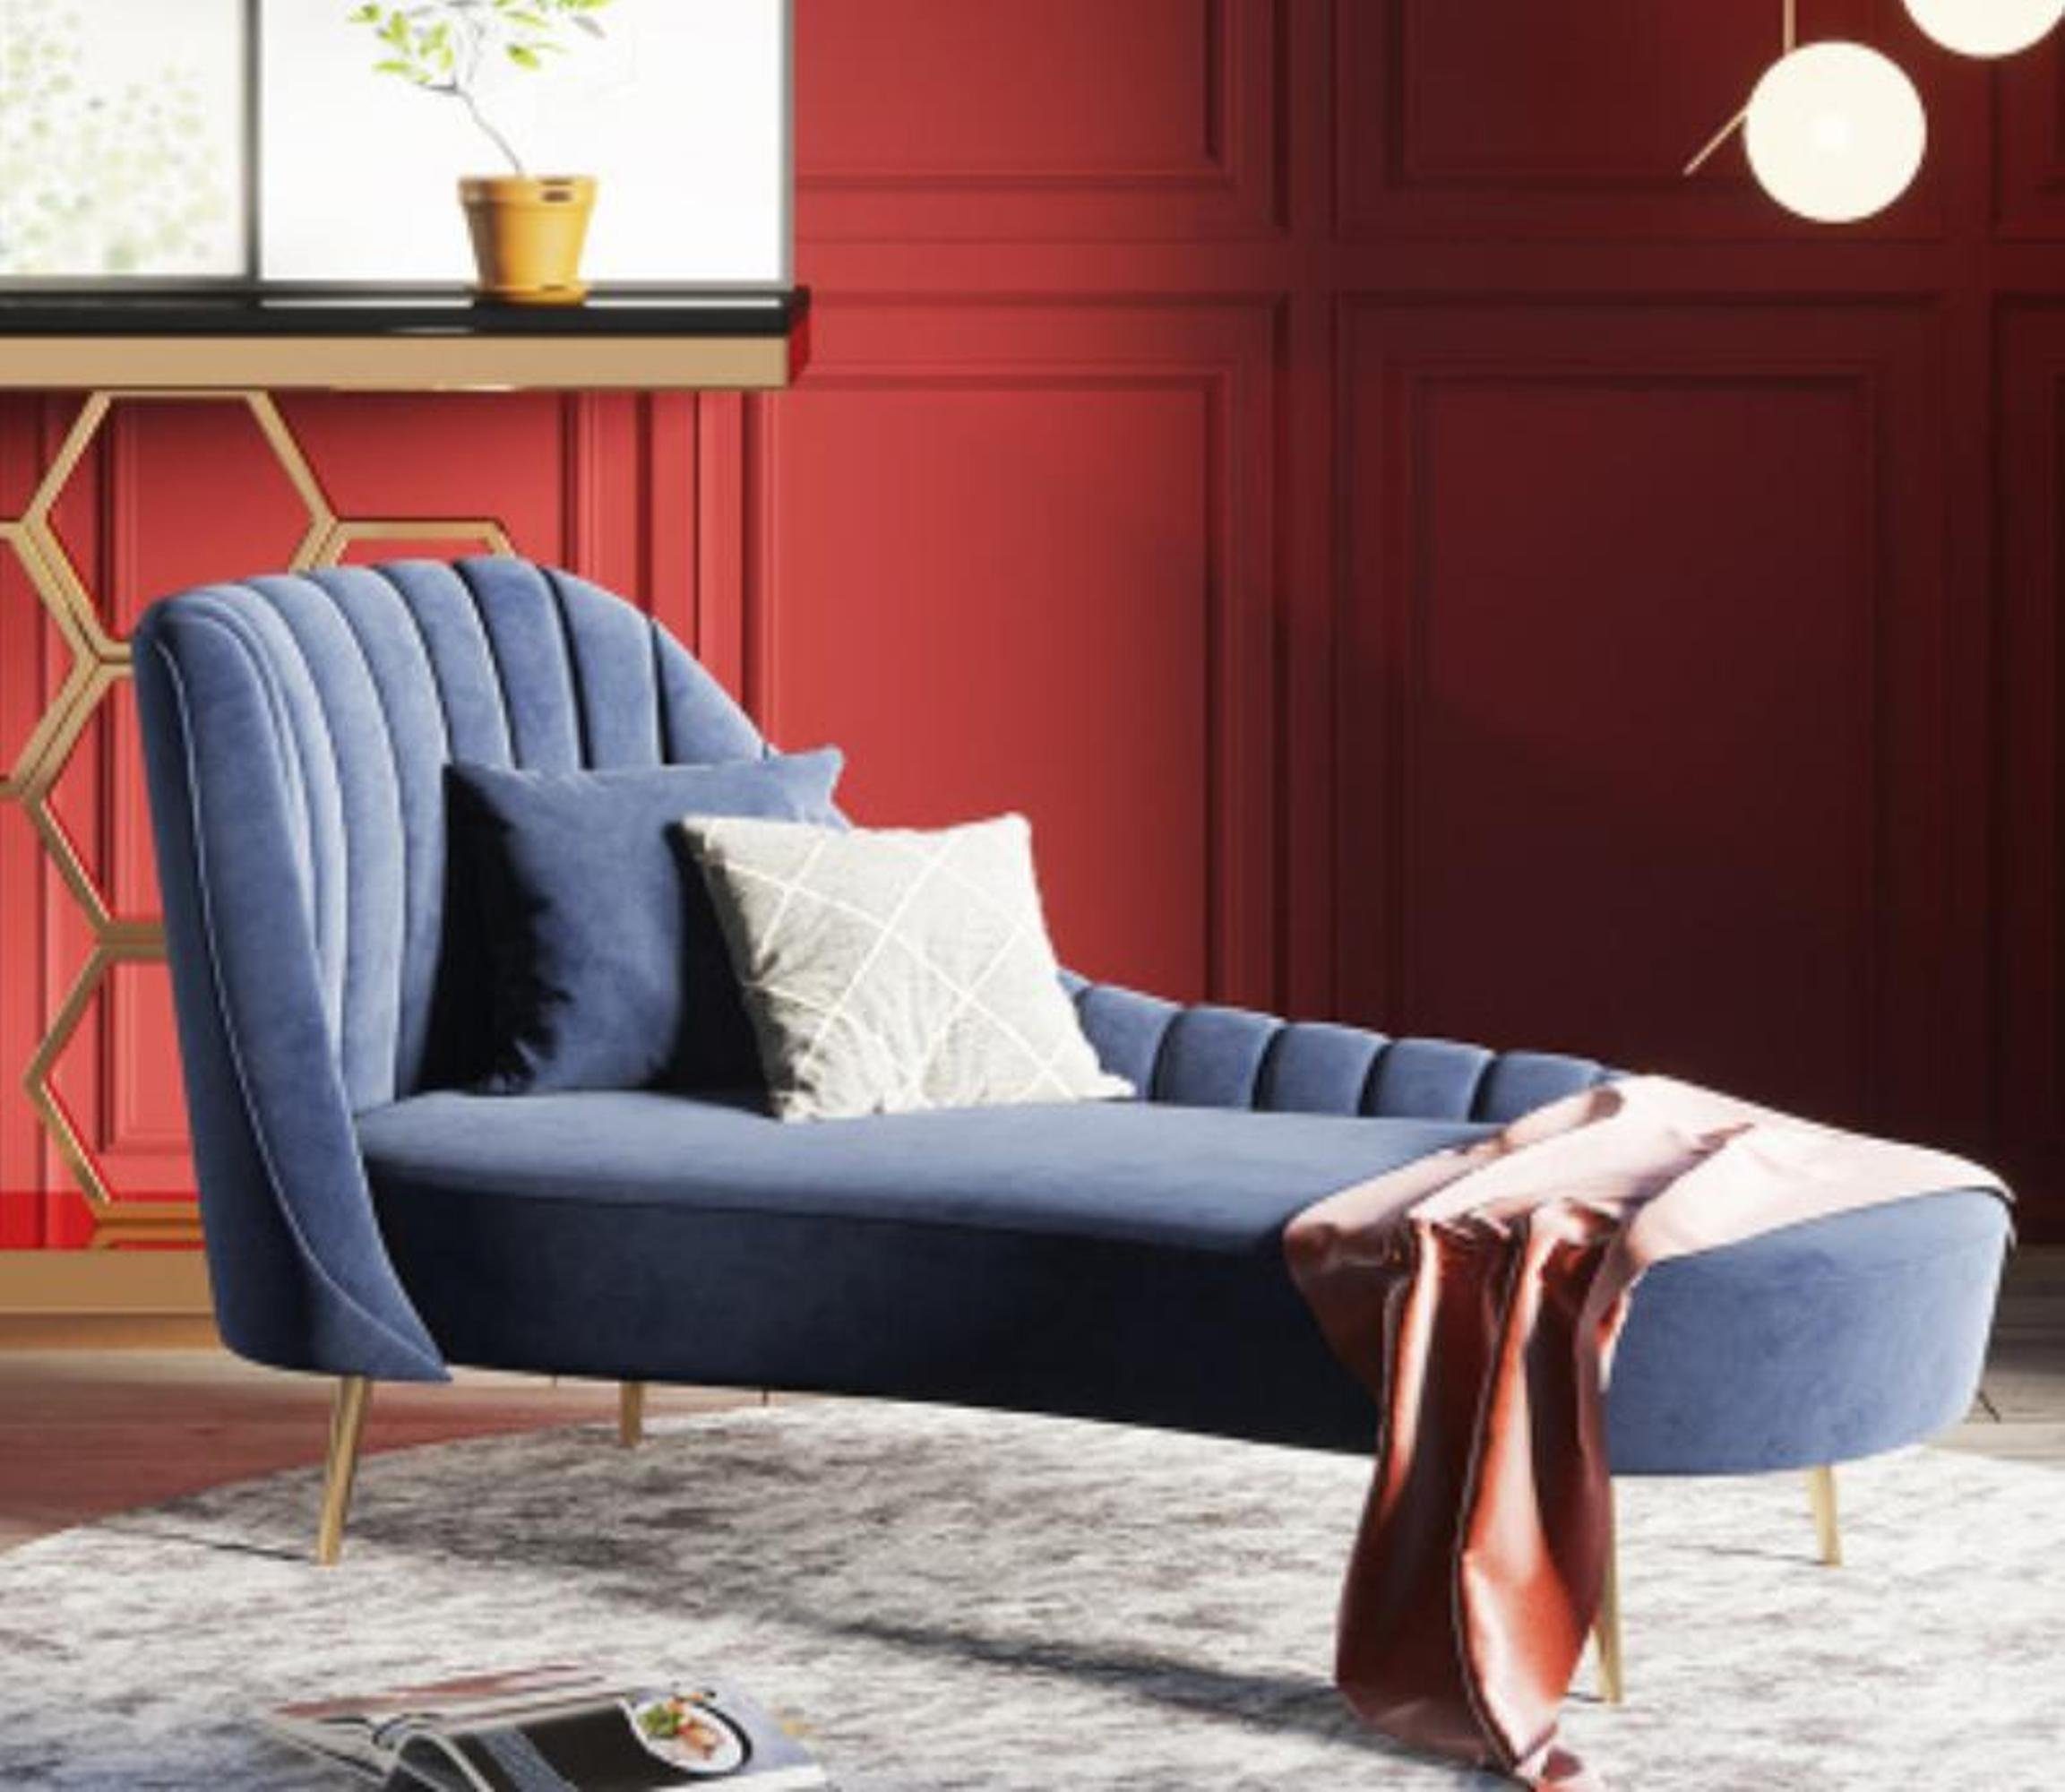 JVmoebel Chaiselongue Chaise Lounge Liege Luxus Möbel Polster Liegen Sofa Relax, Made in Europe Blau